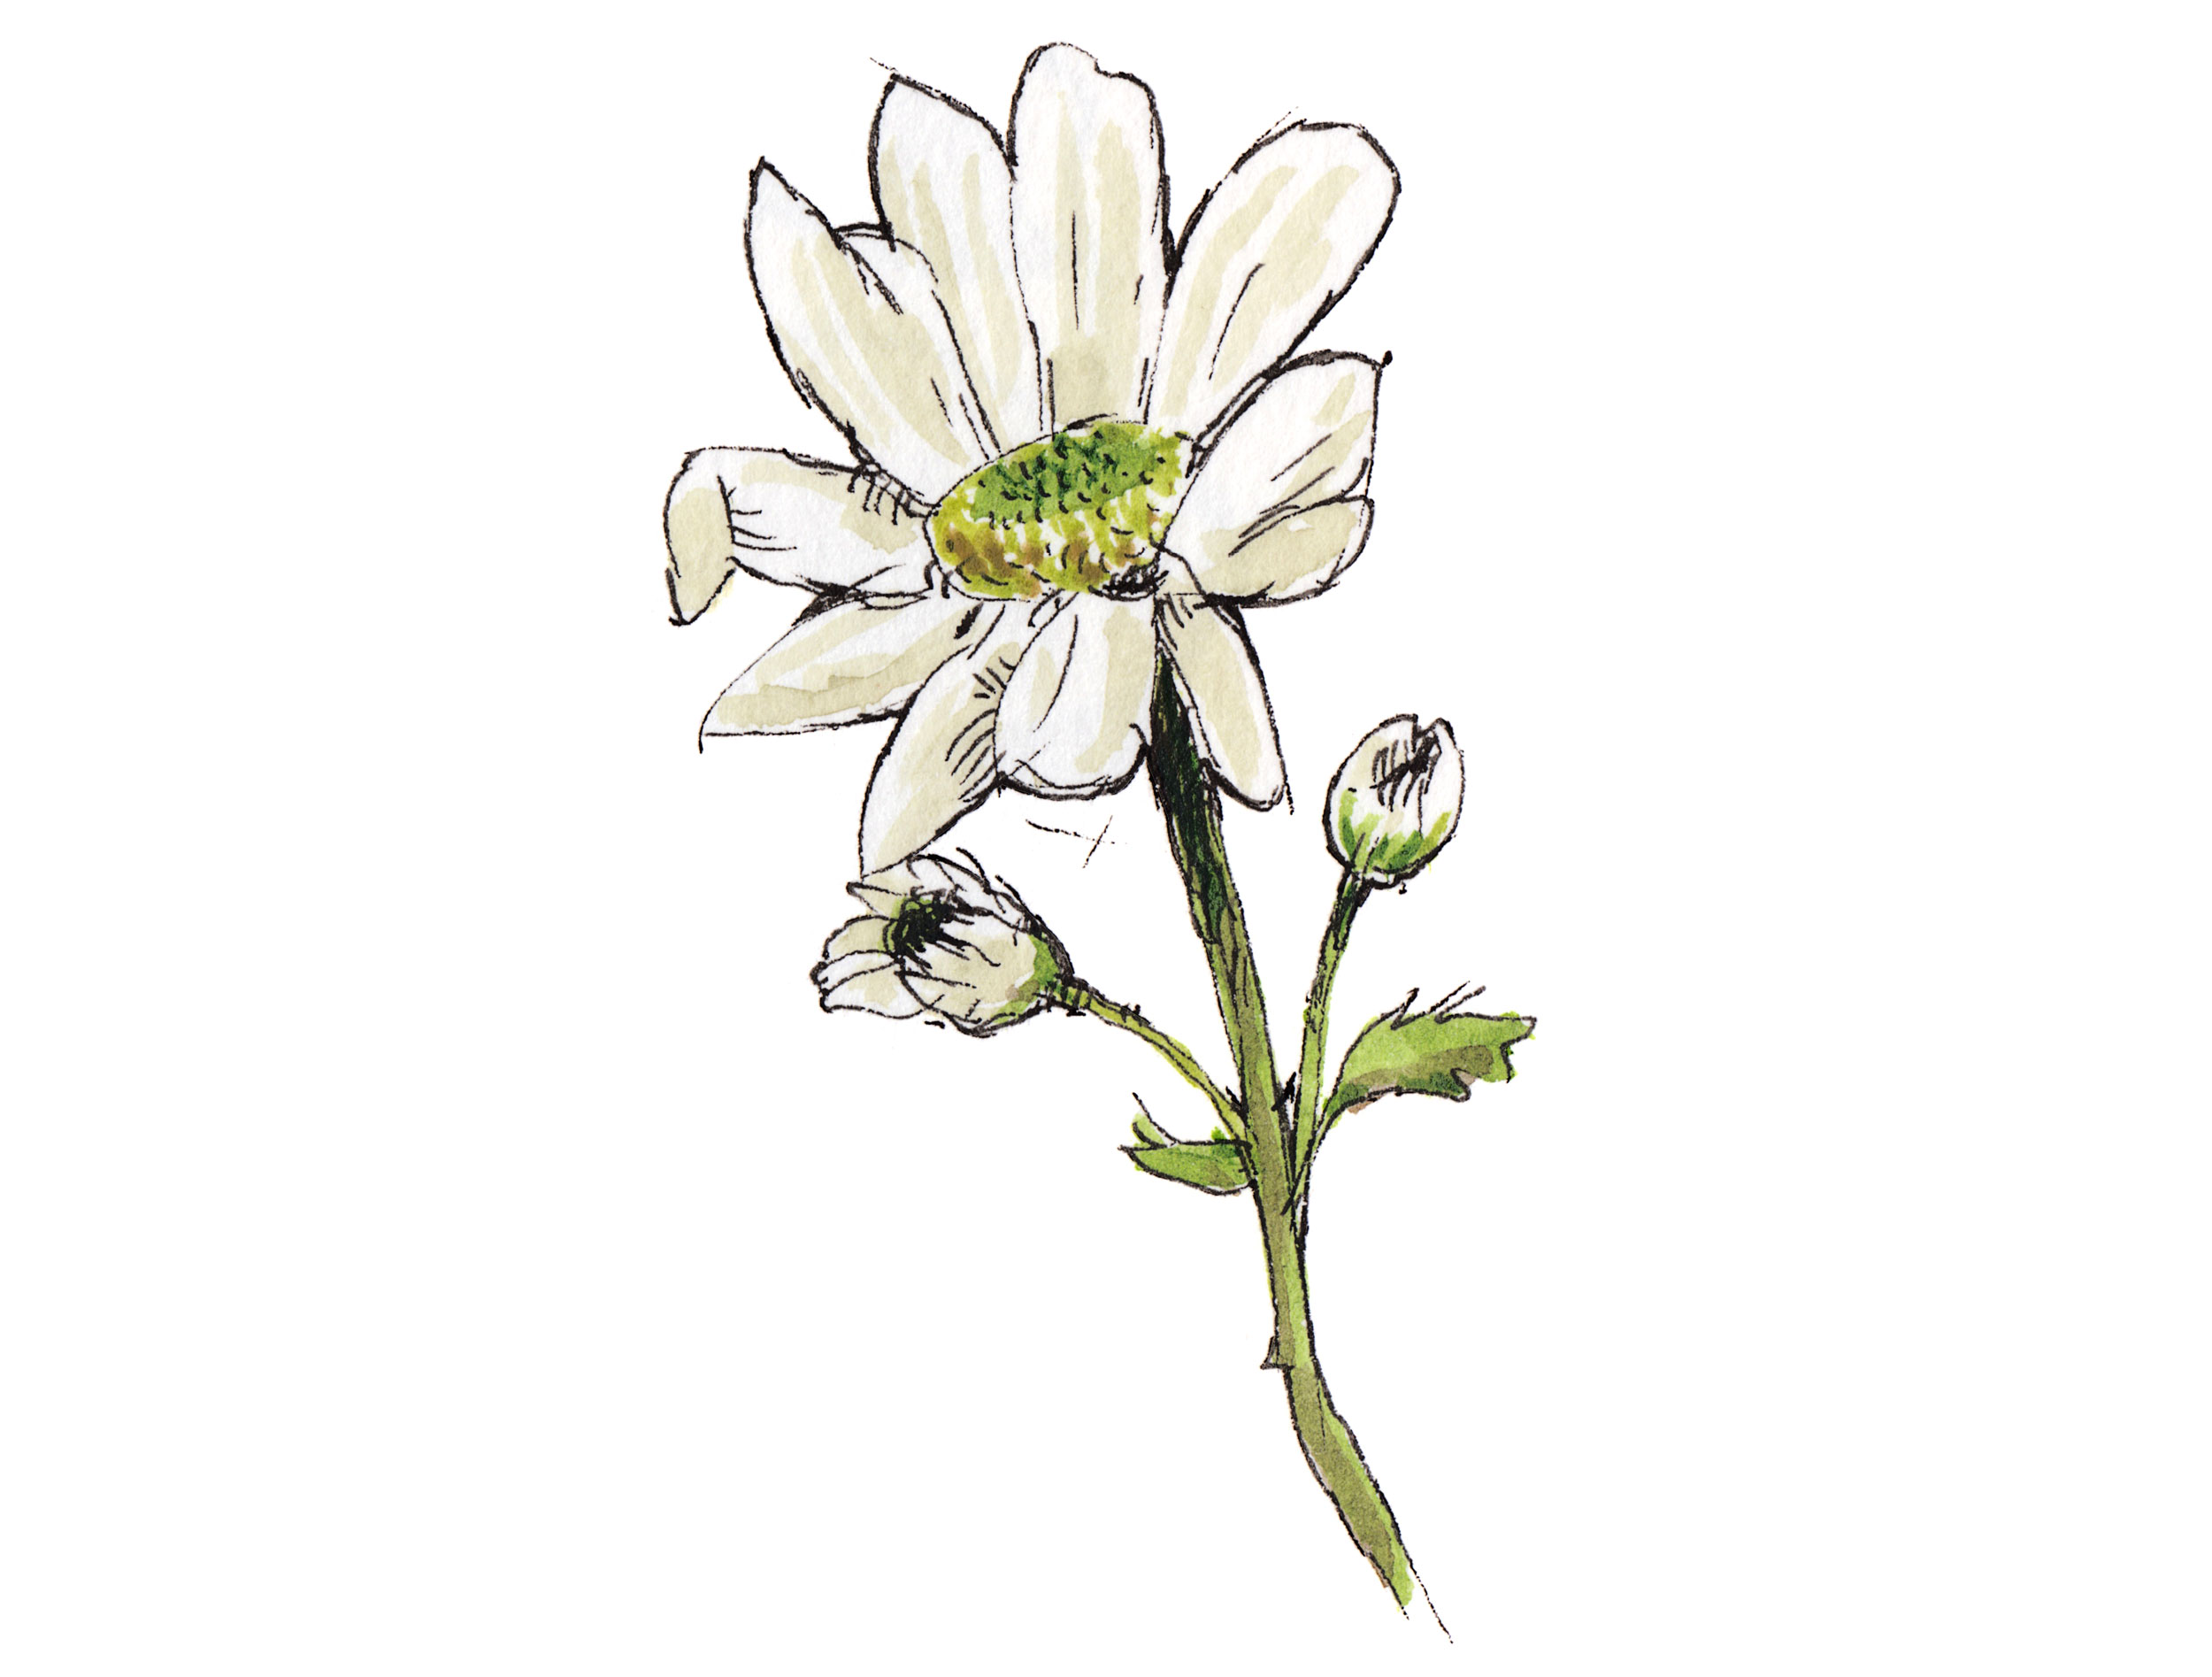 Sketch of a daisy flower.